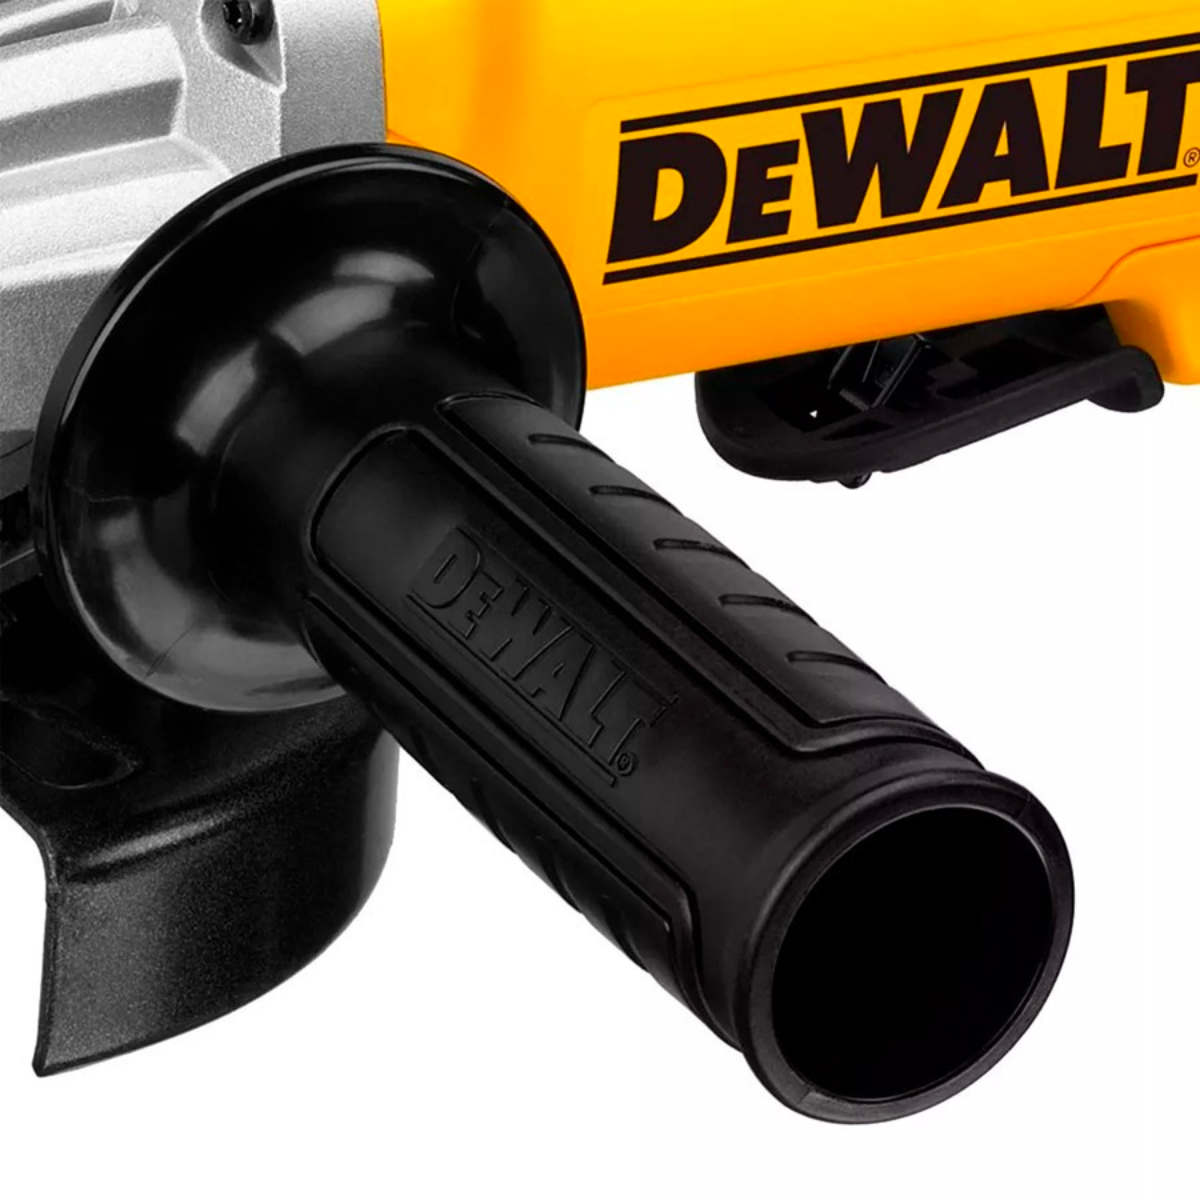 Dewalt Angle Grinder 115mm 1200W Deadman DWE4212 Power Tool Services